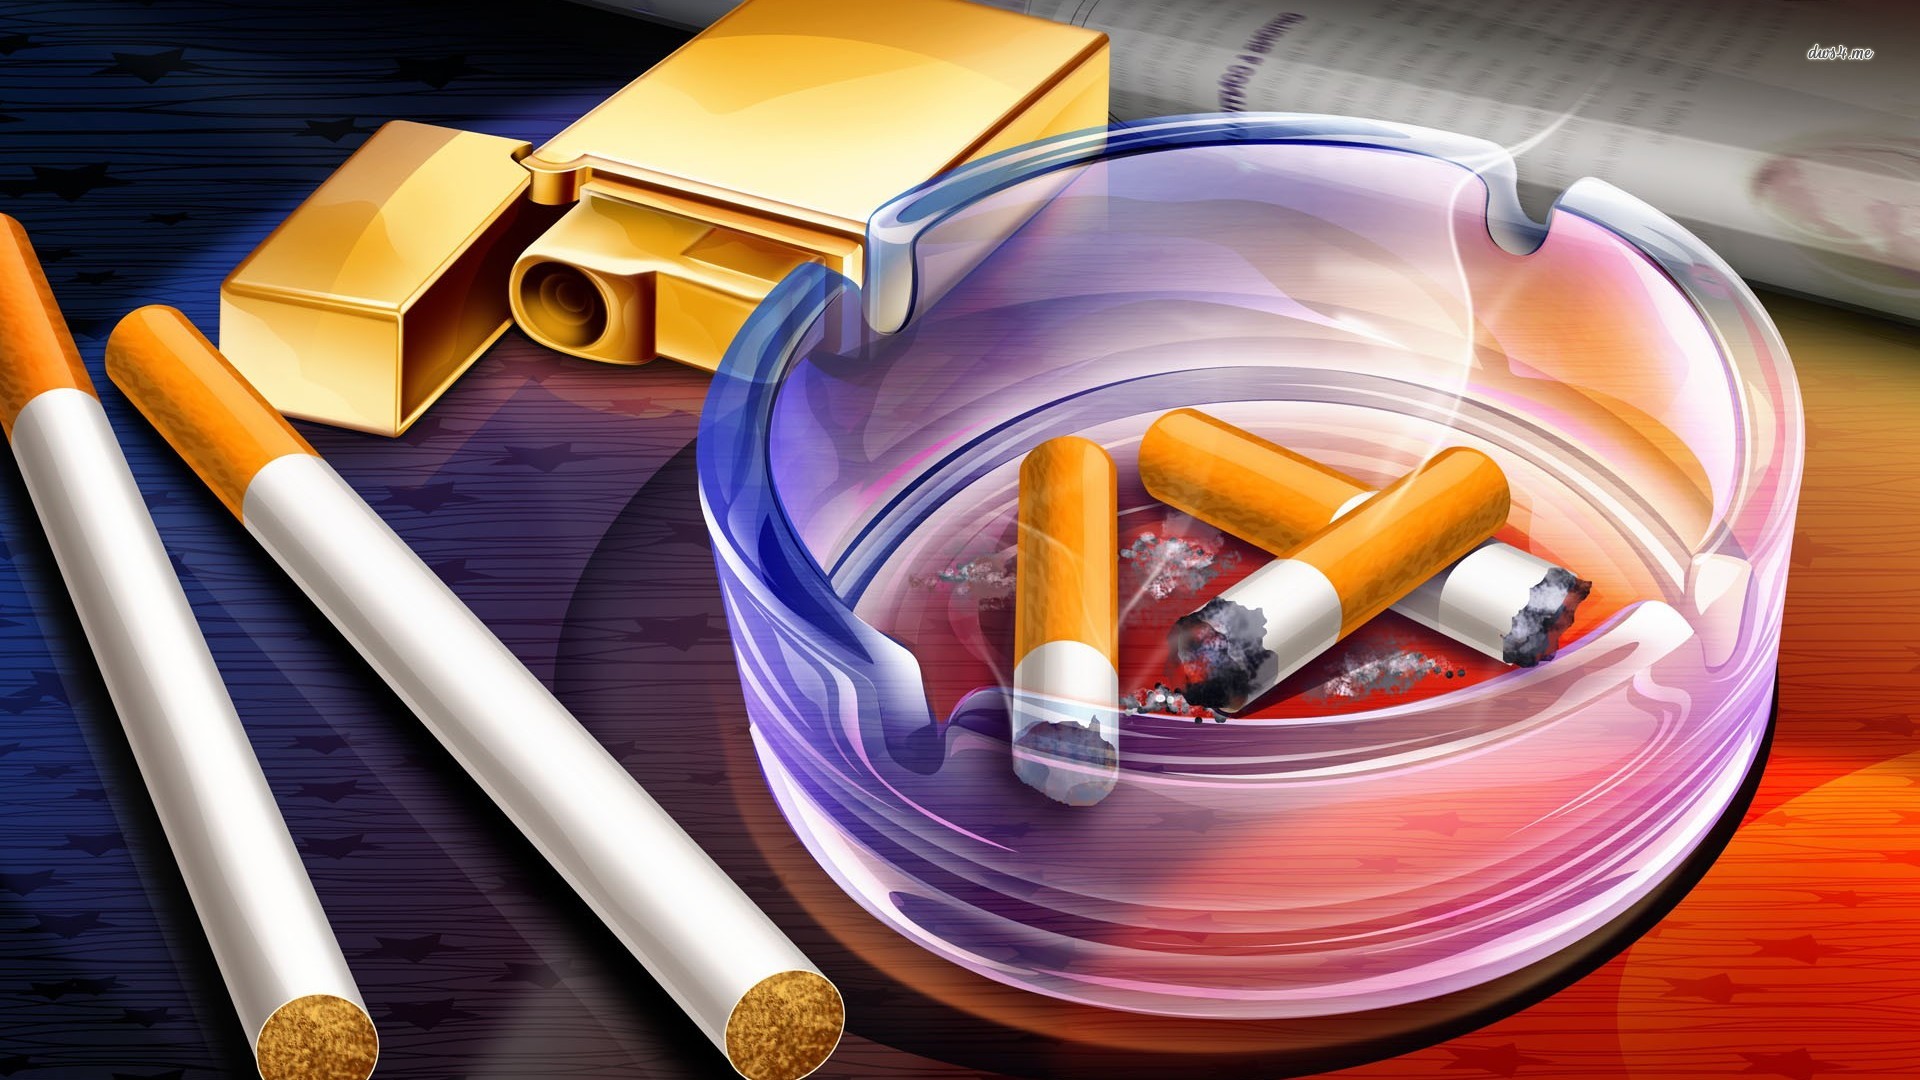 Ashtray Cigarettes And Lighter Wallpaper Digital Art